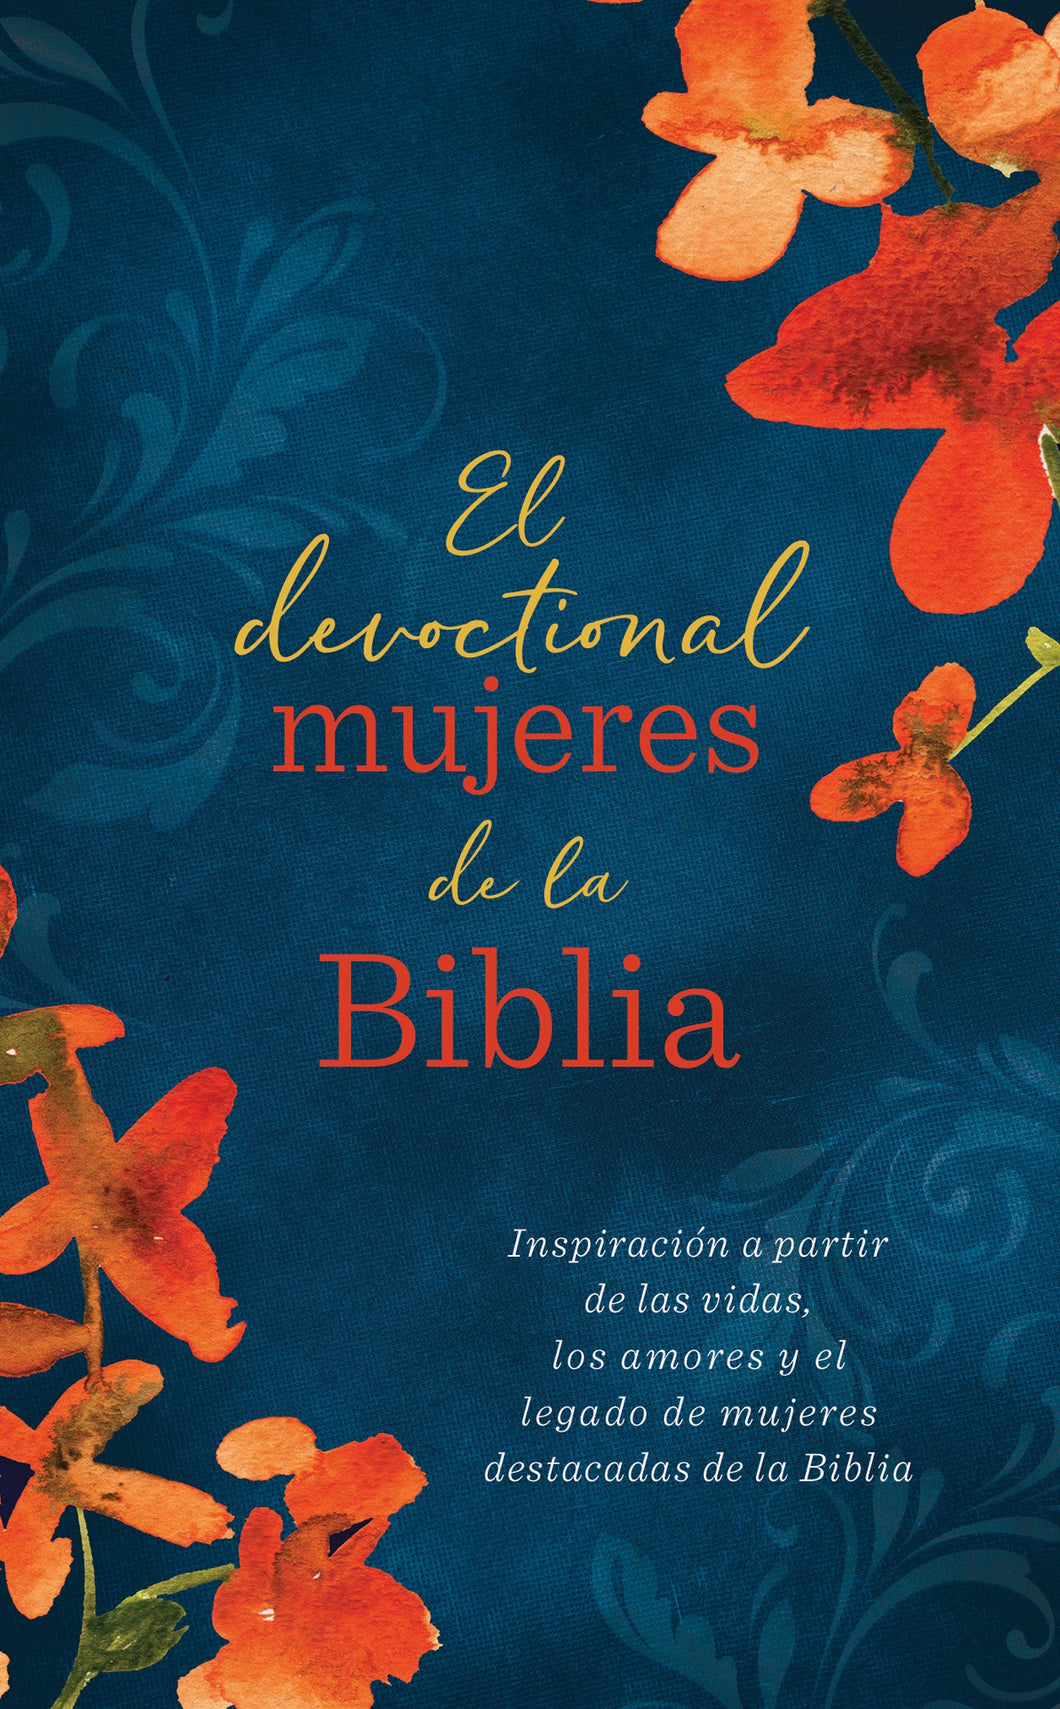 Spanish-Women Of The Bible Devotional) El devocional mujeres de la Biblia